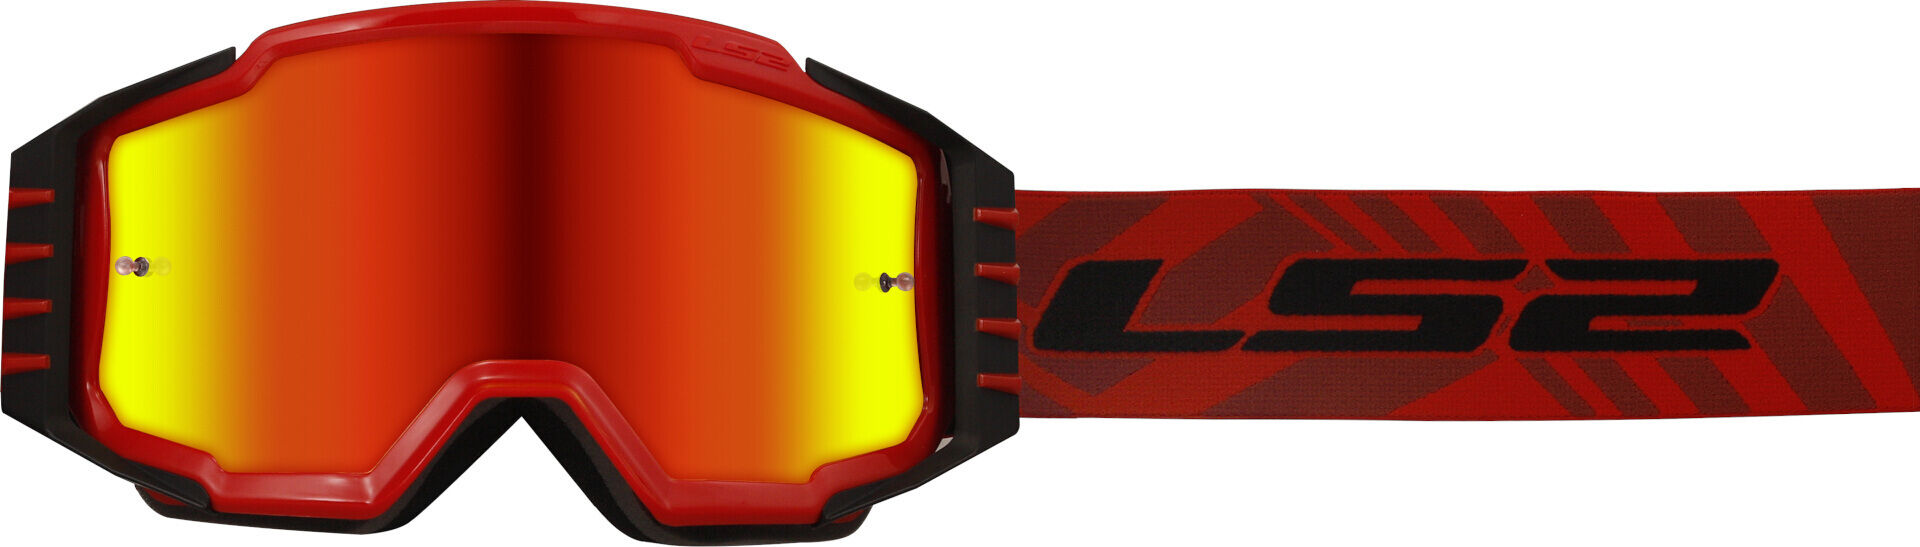 LS2 Charger Pro Gafas de motocross - Rojo